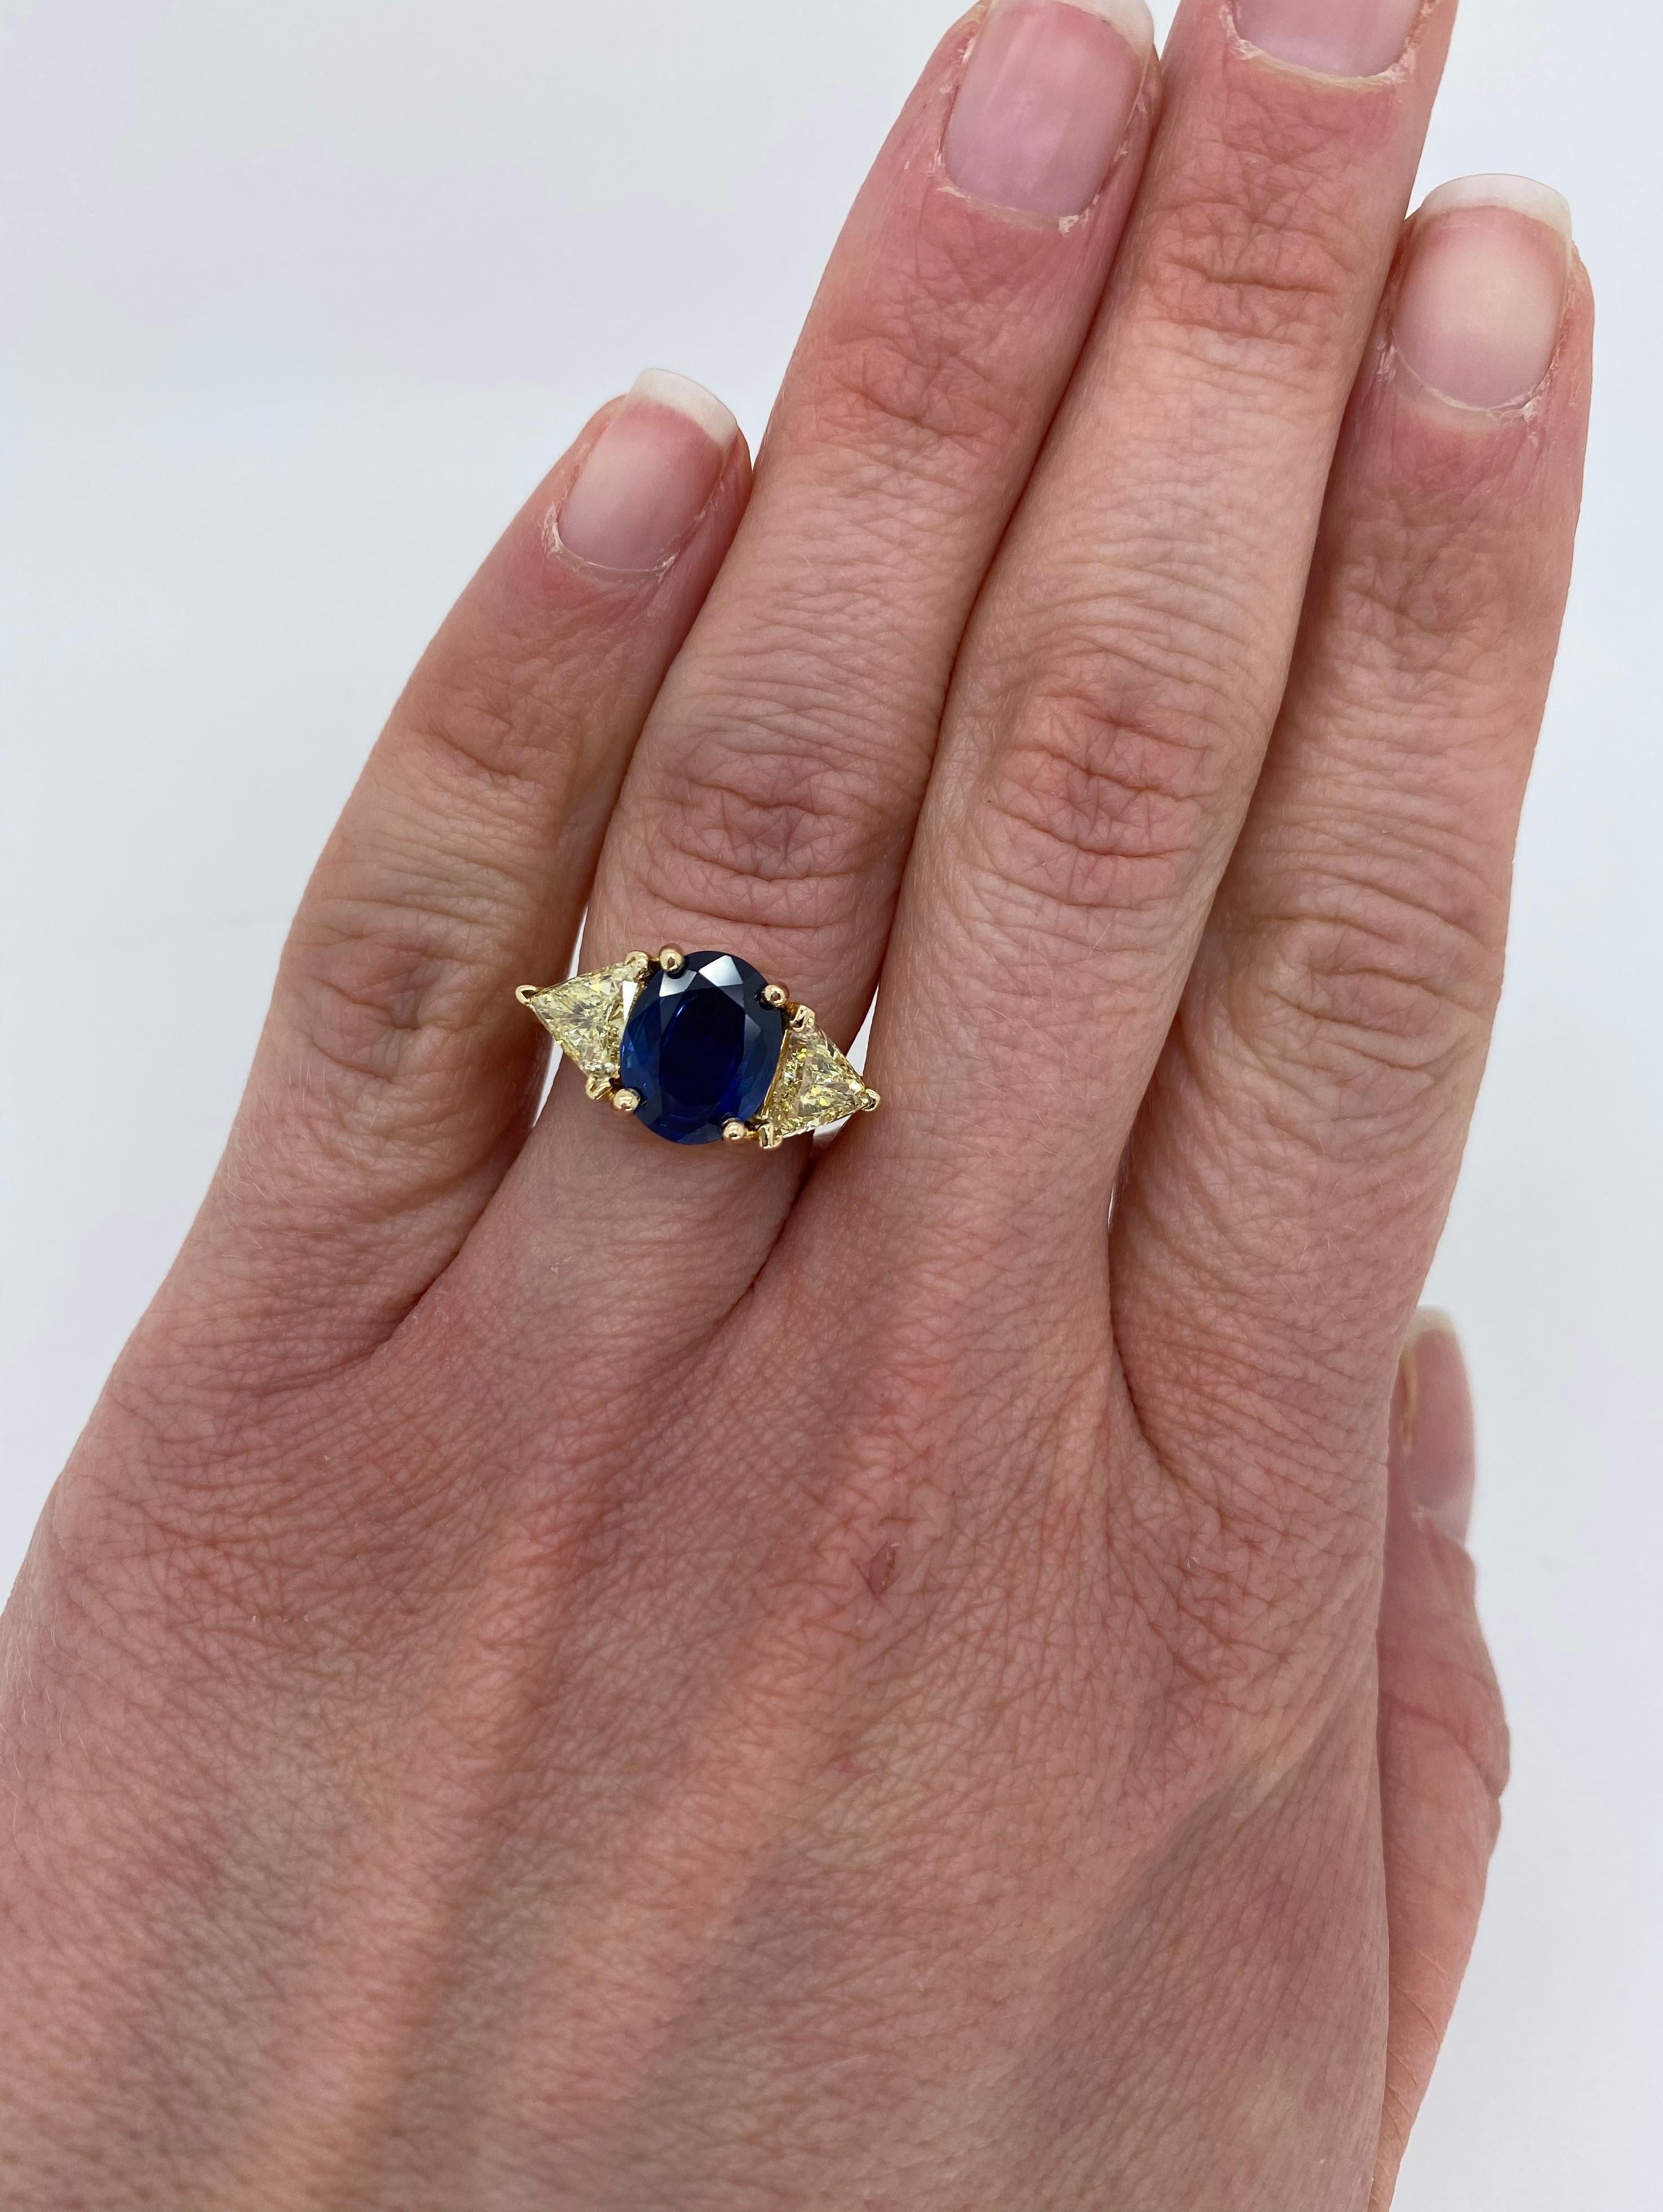 Unique Blue Sapphire and light yellow diamond ring crafted in 14k yellow gold.

Gemstone: Blue Sapphire & Diamond
Gemstone Carat Weight: Approximately 10.12mm x 8.25mm Oval Cut 
Diamond Cut: Trilliant Cut Diamonds
Average Diamond Color: Light